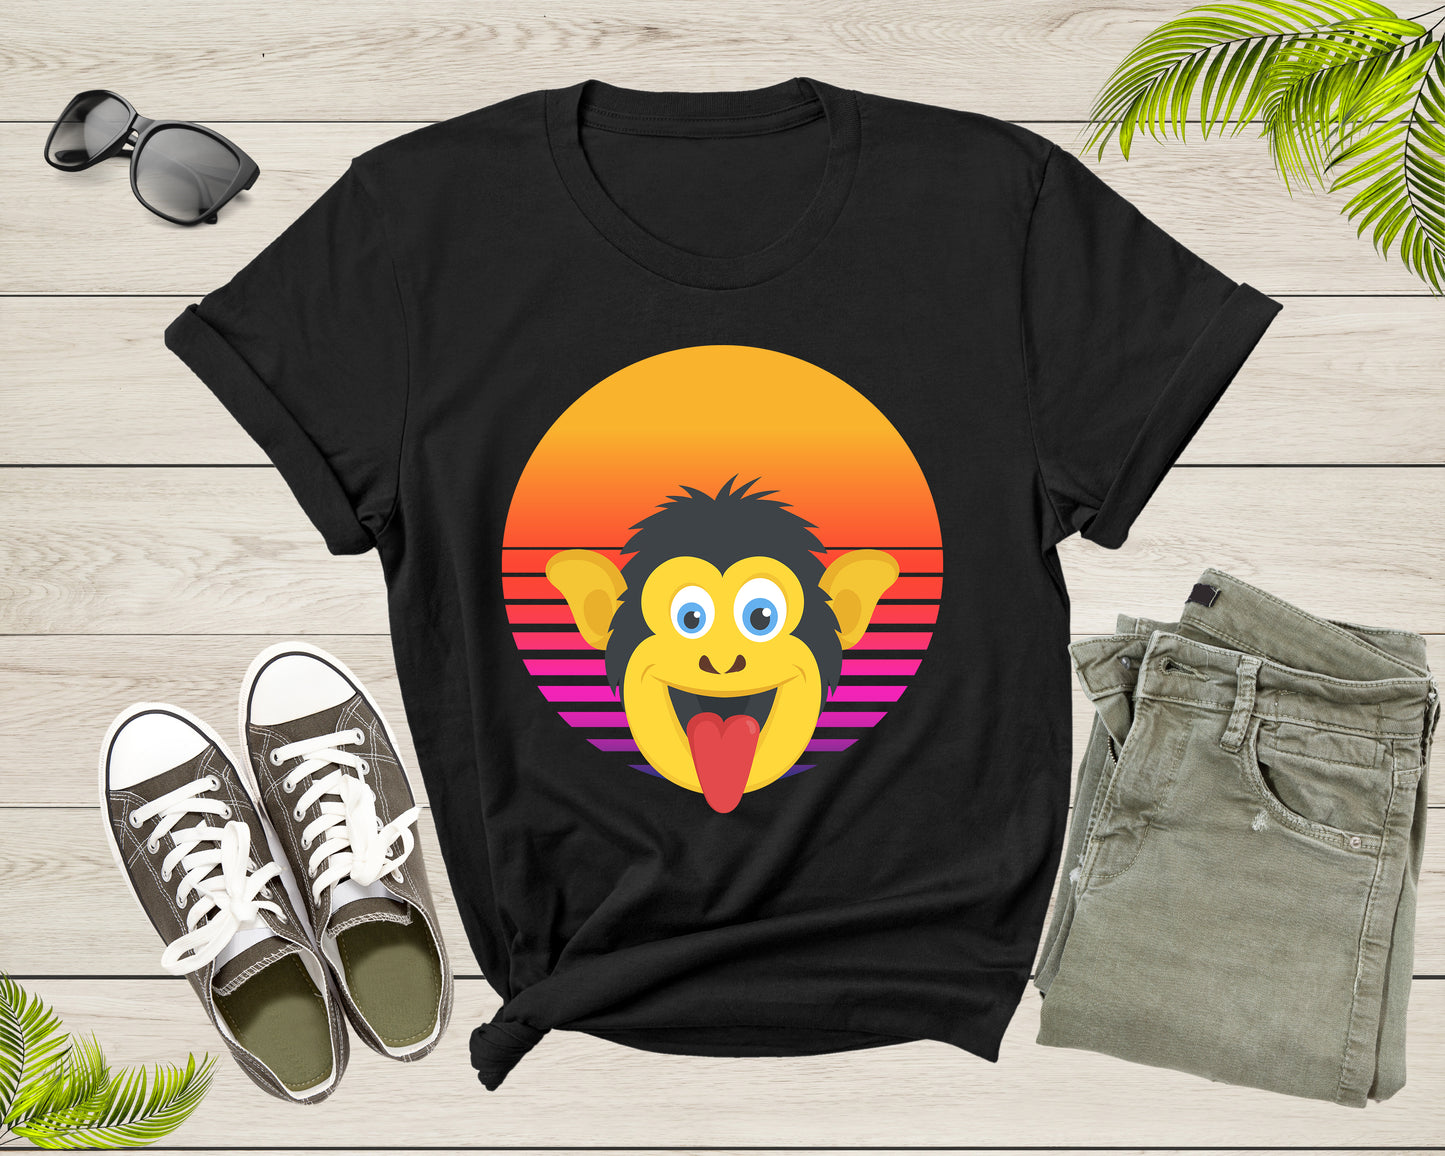 Cool Monkey Lover Gift Shirt For Adult Men Women Kids Monkey Graphics Present Ideas Tshirt Funny Monkey Boy Girl Birthday Present T-shirt